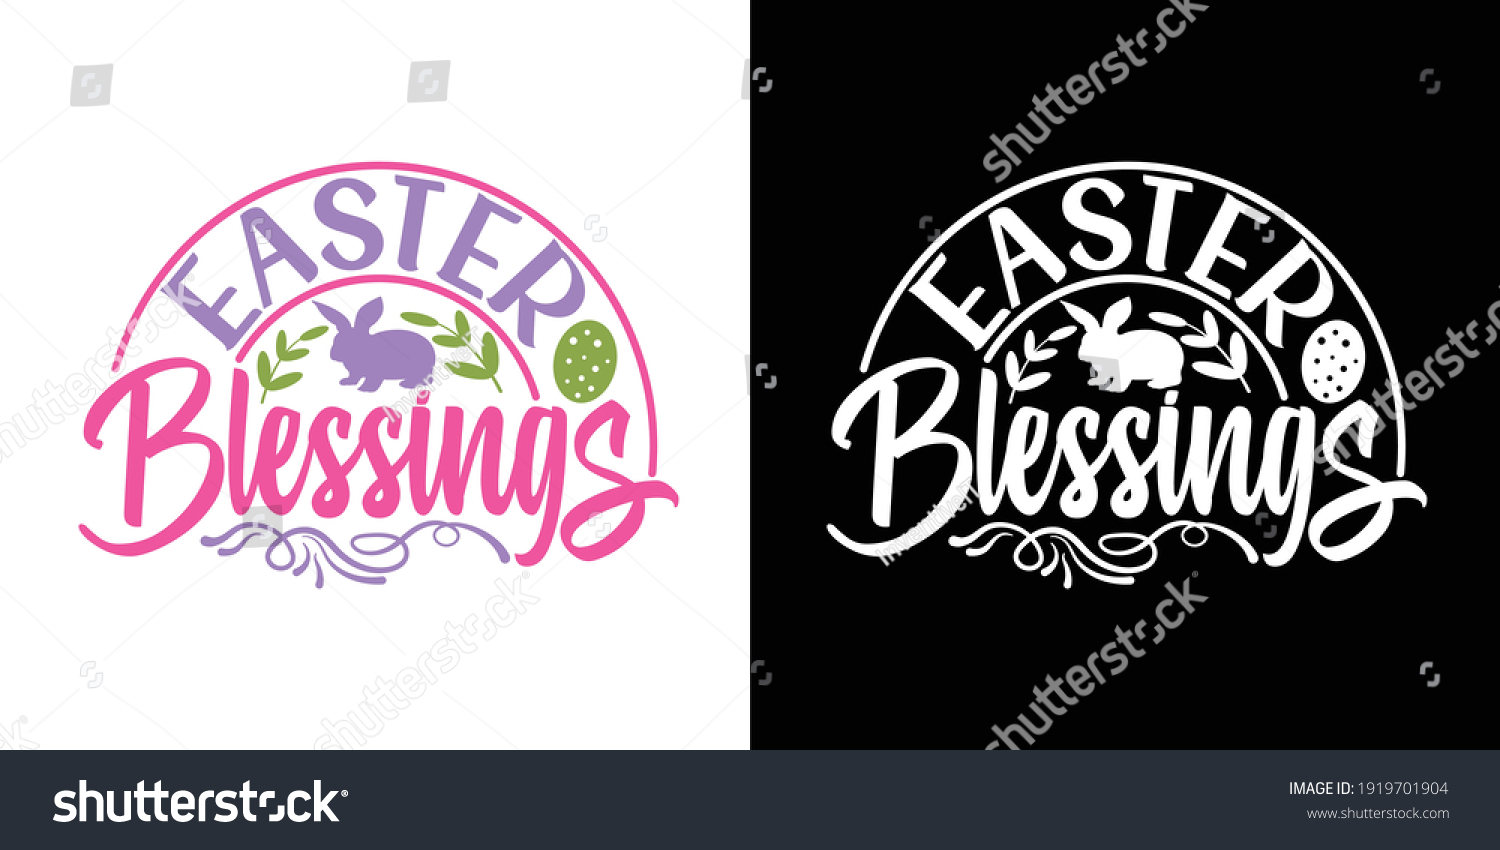 SVG of Easter Blessings Printable Vector Illustration svg